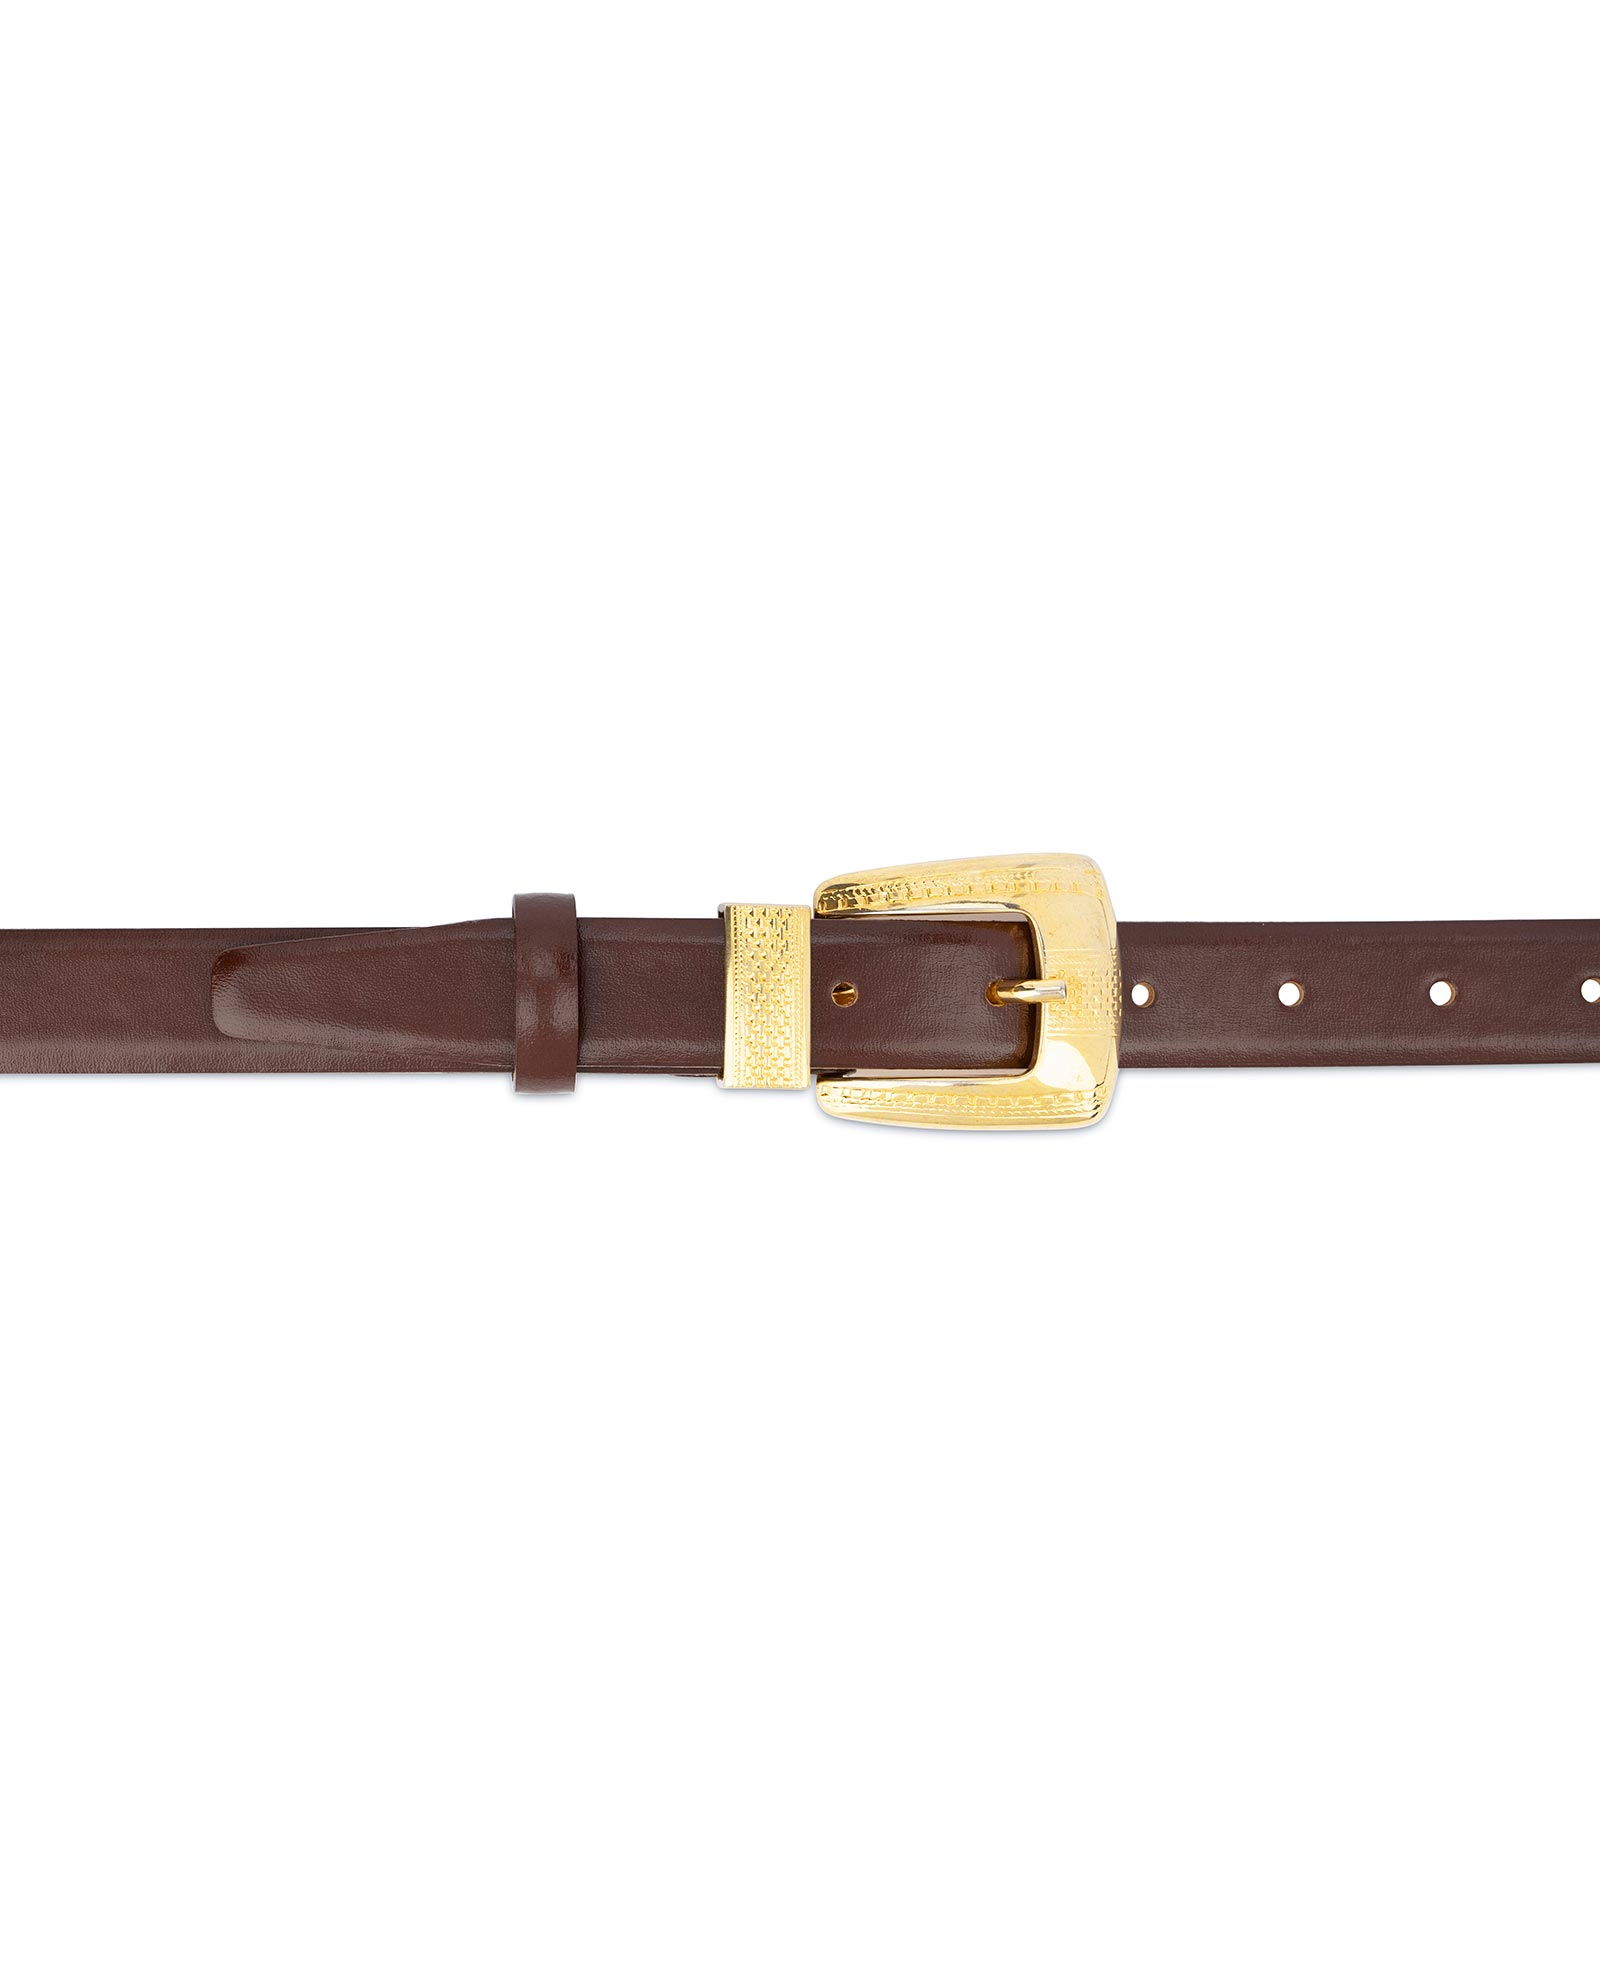 Buy Women's Cognac Belt With Gold Buckle | LeatherBeltsOnline.com